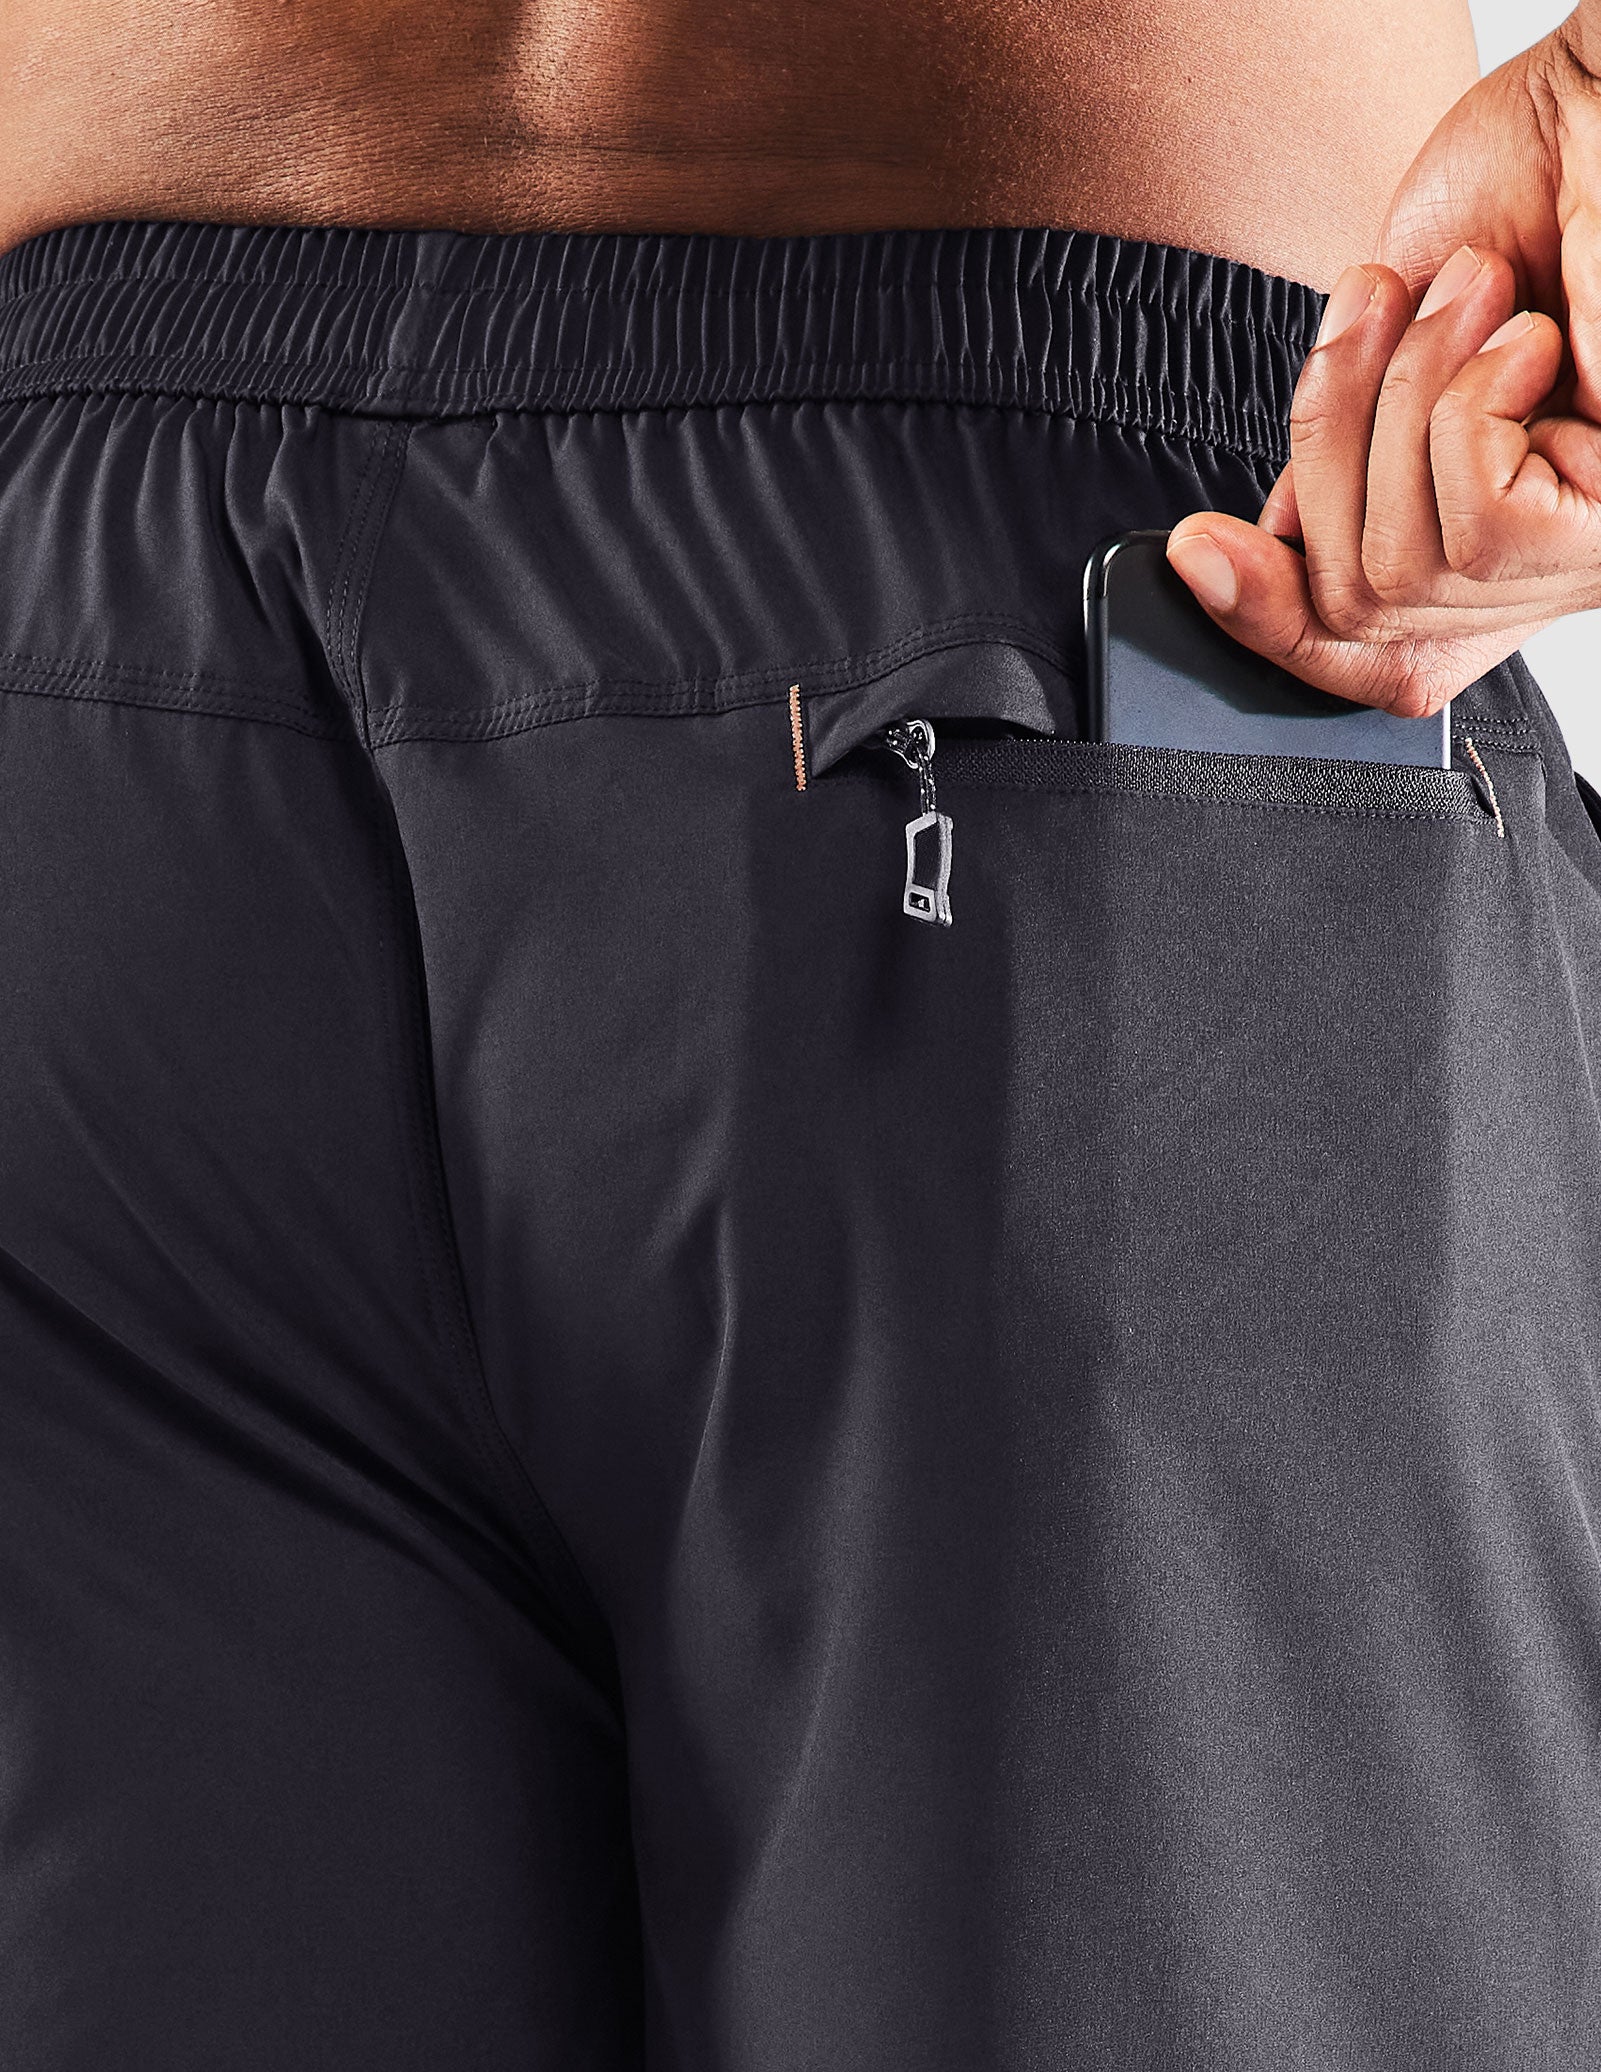 Pantalones cortos para correr de secado rápido para hombre con bolsillo con cremallera de 7 pulgadas